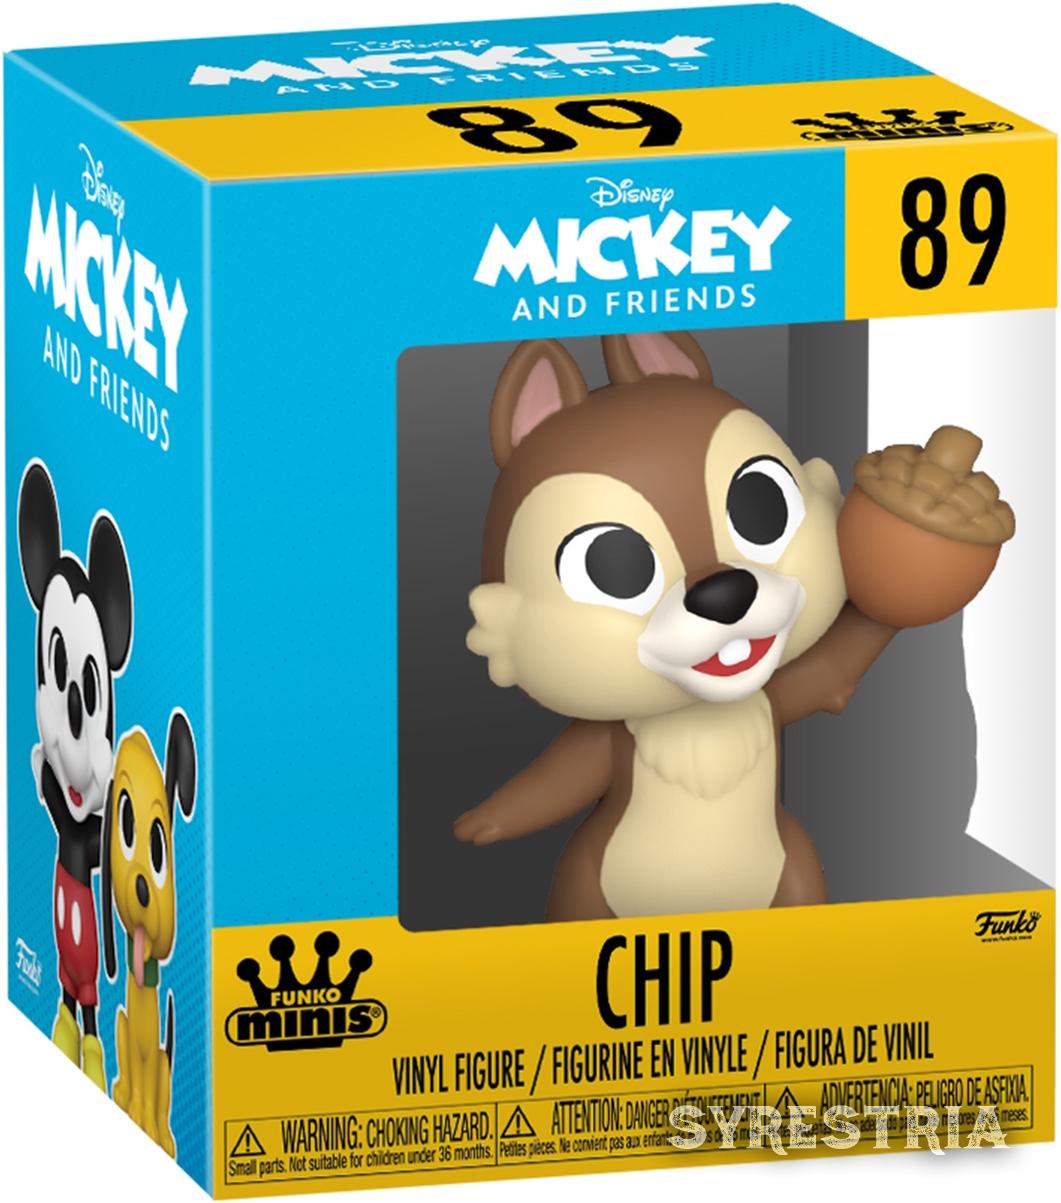 Disney Mickey and Frinds - Chip 89 - Funko Minis Vynl Figuren